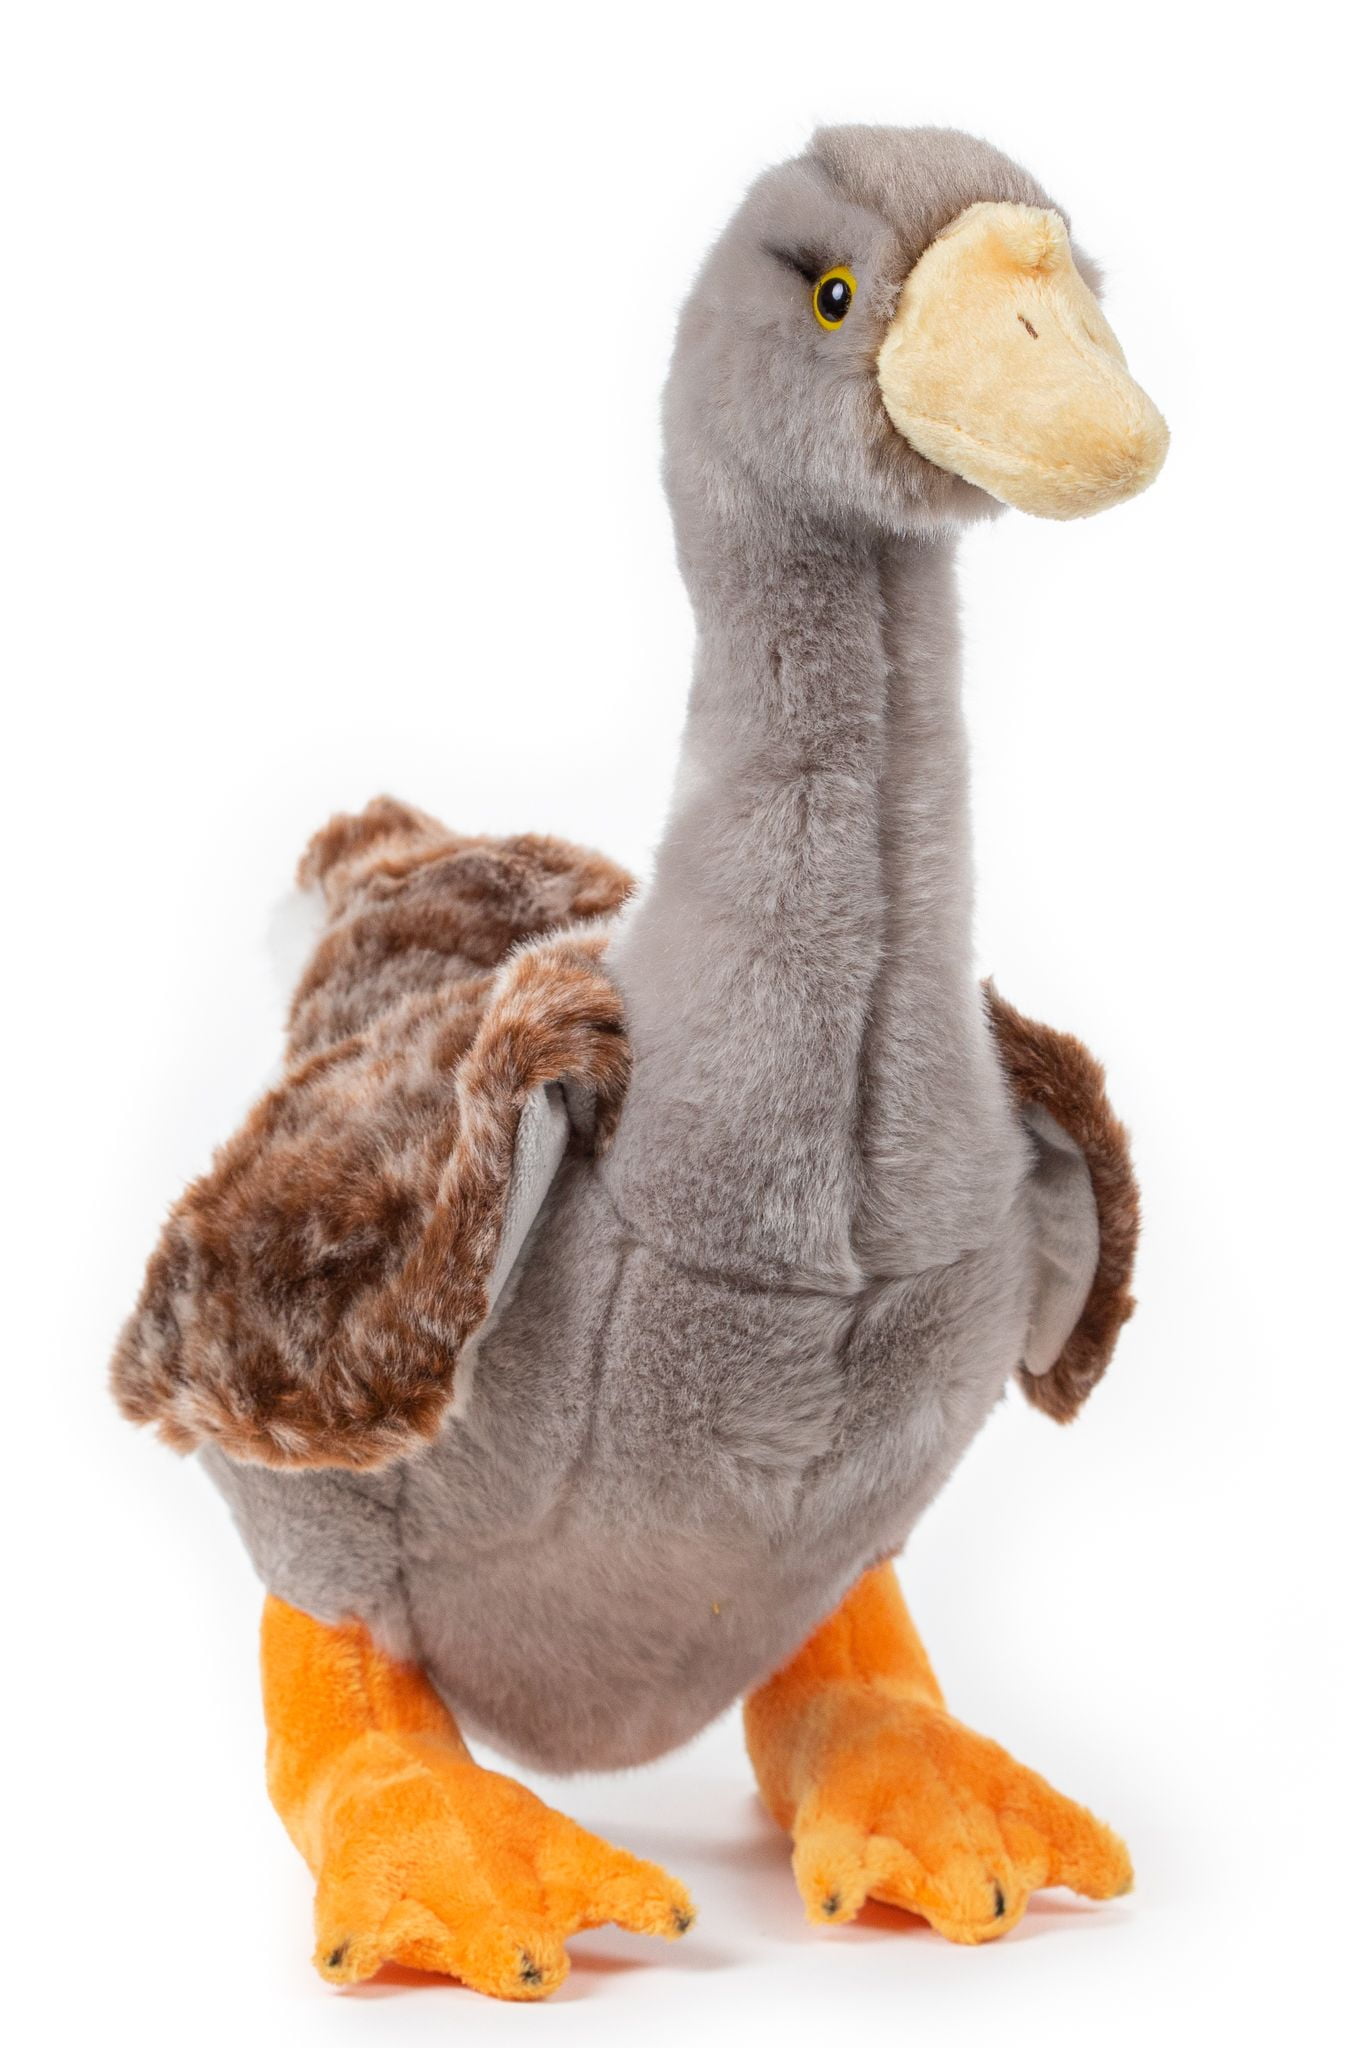 goose stuffed animal